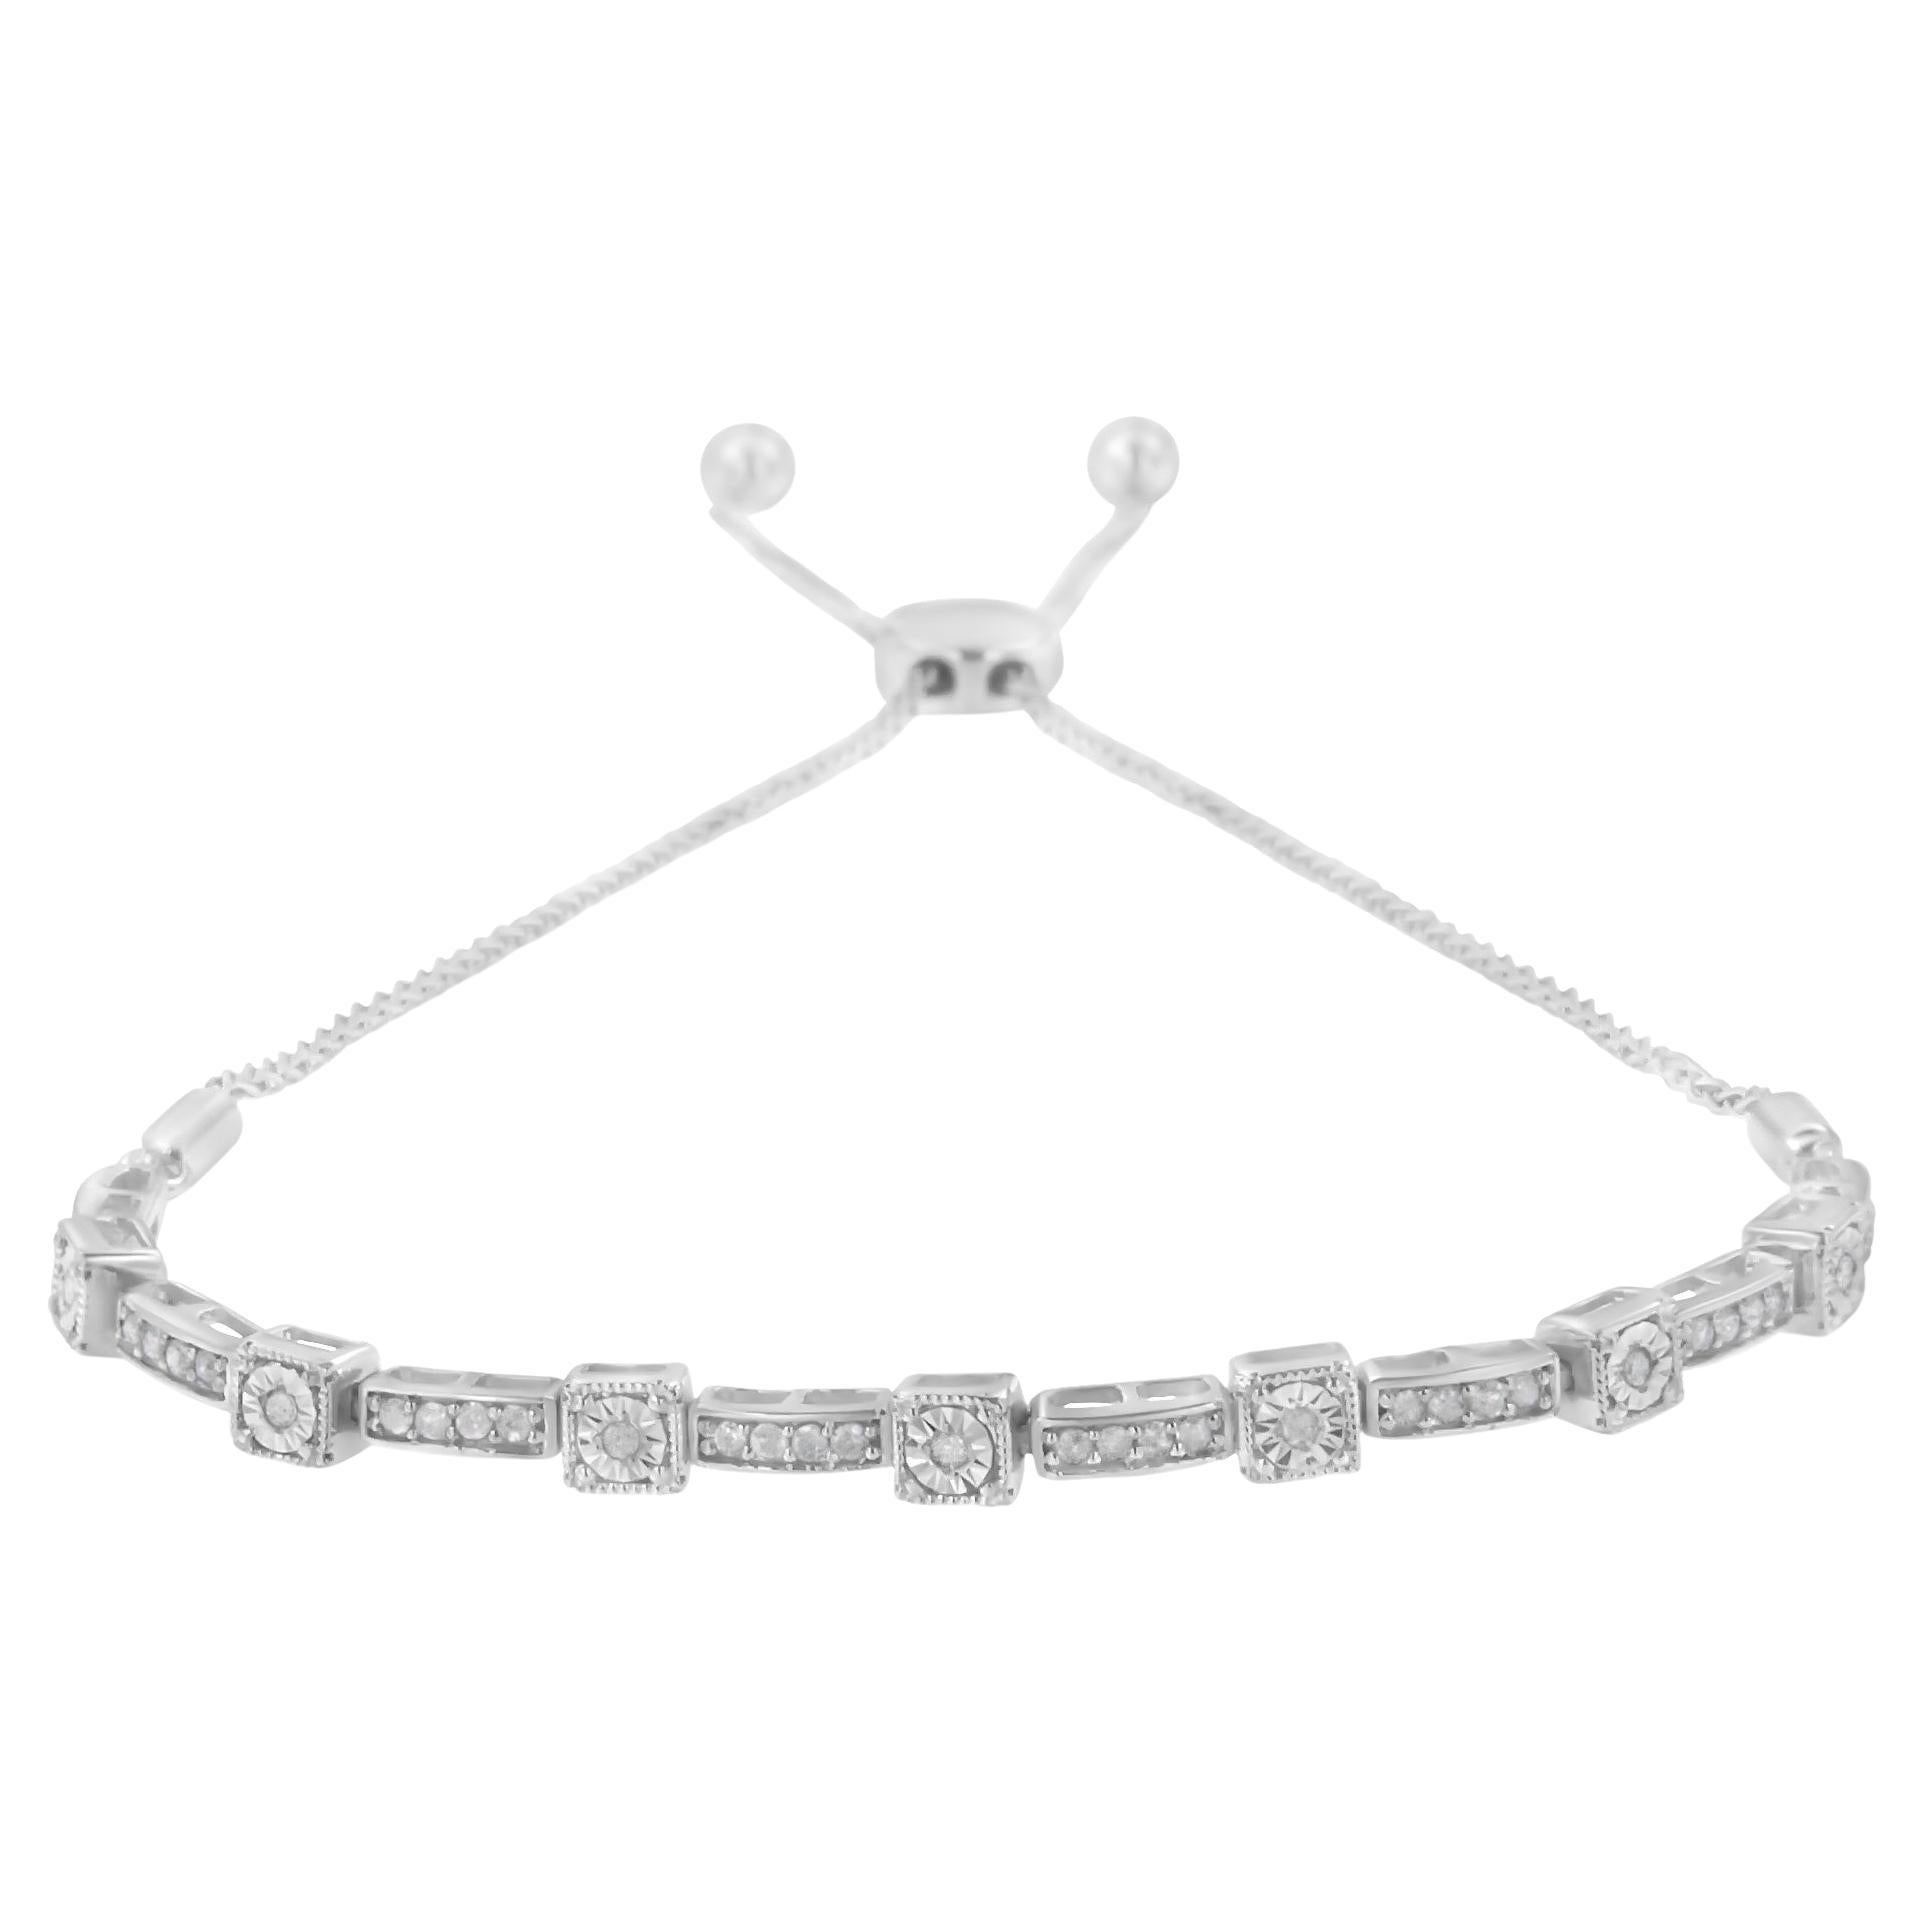 .925 Sterling Silver 1/4 Carat Diamond Bar Bolo Bracelet